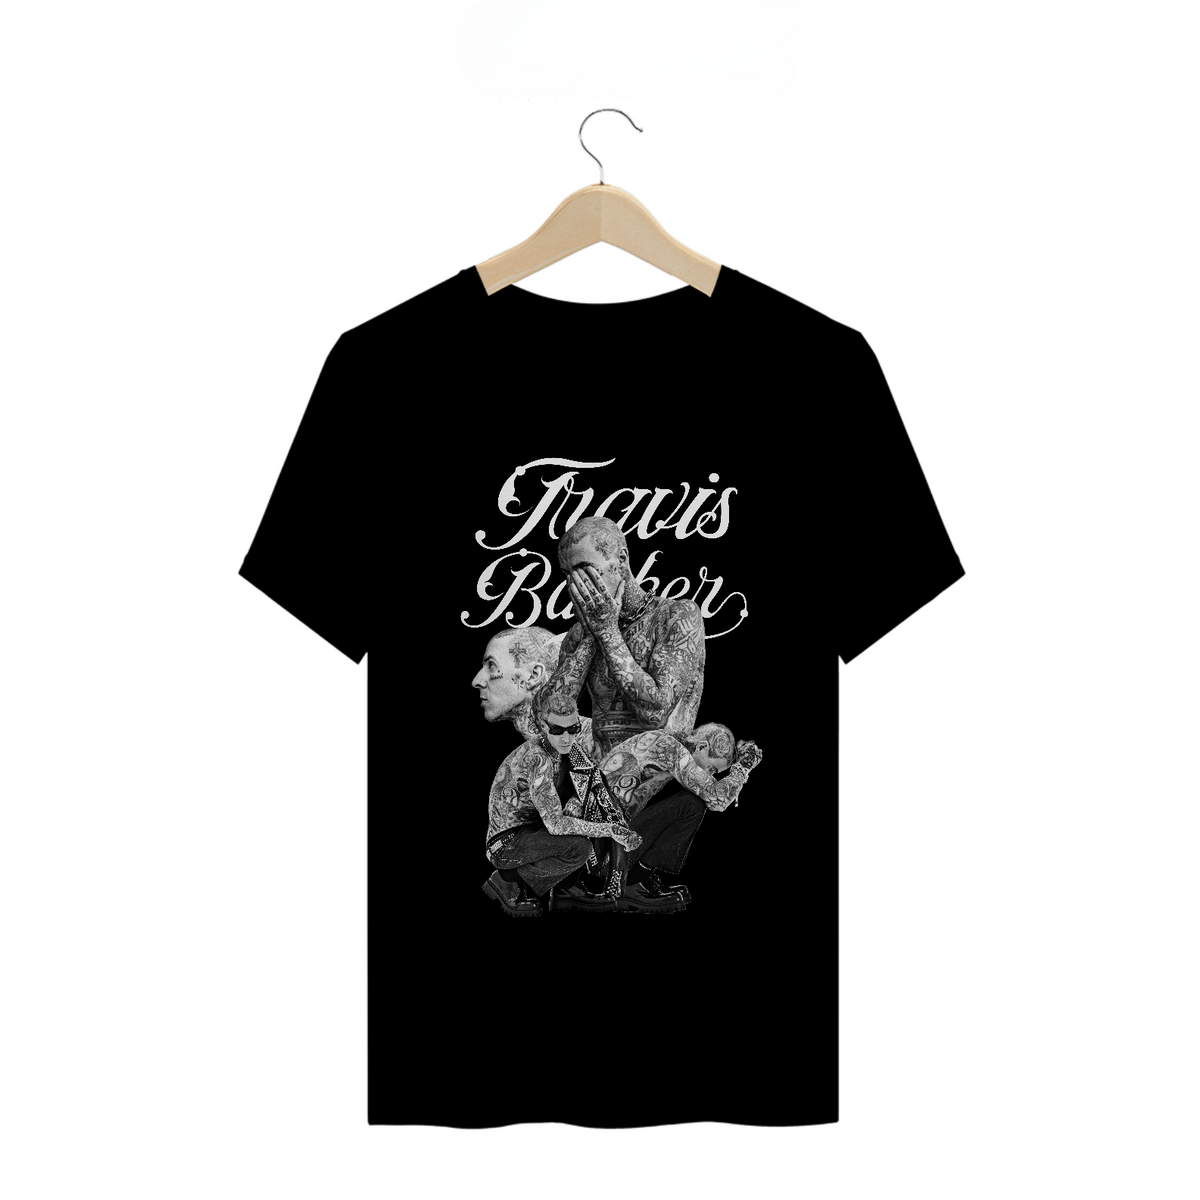 Nome do produto: Camiseta Travis Barker blink-182